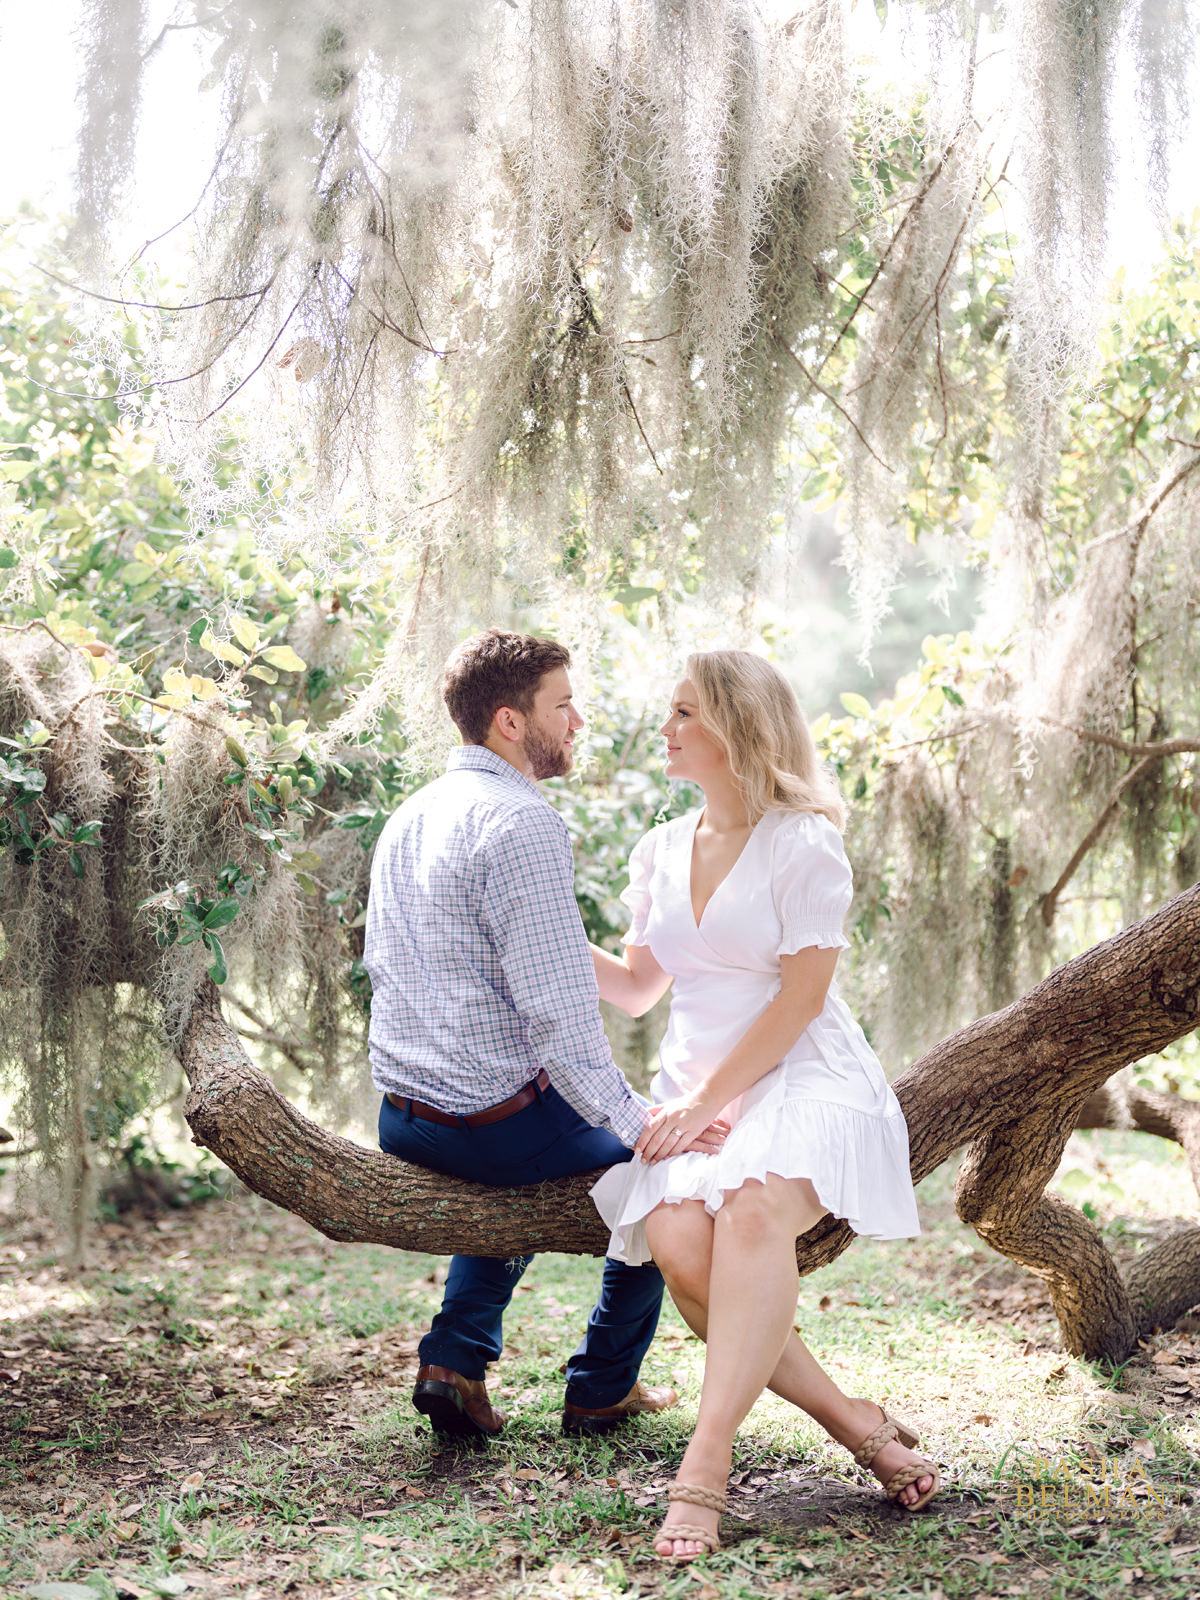 Classic Engagement Photo Ideas near Charleston, South Carolina 